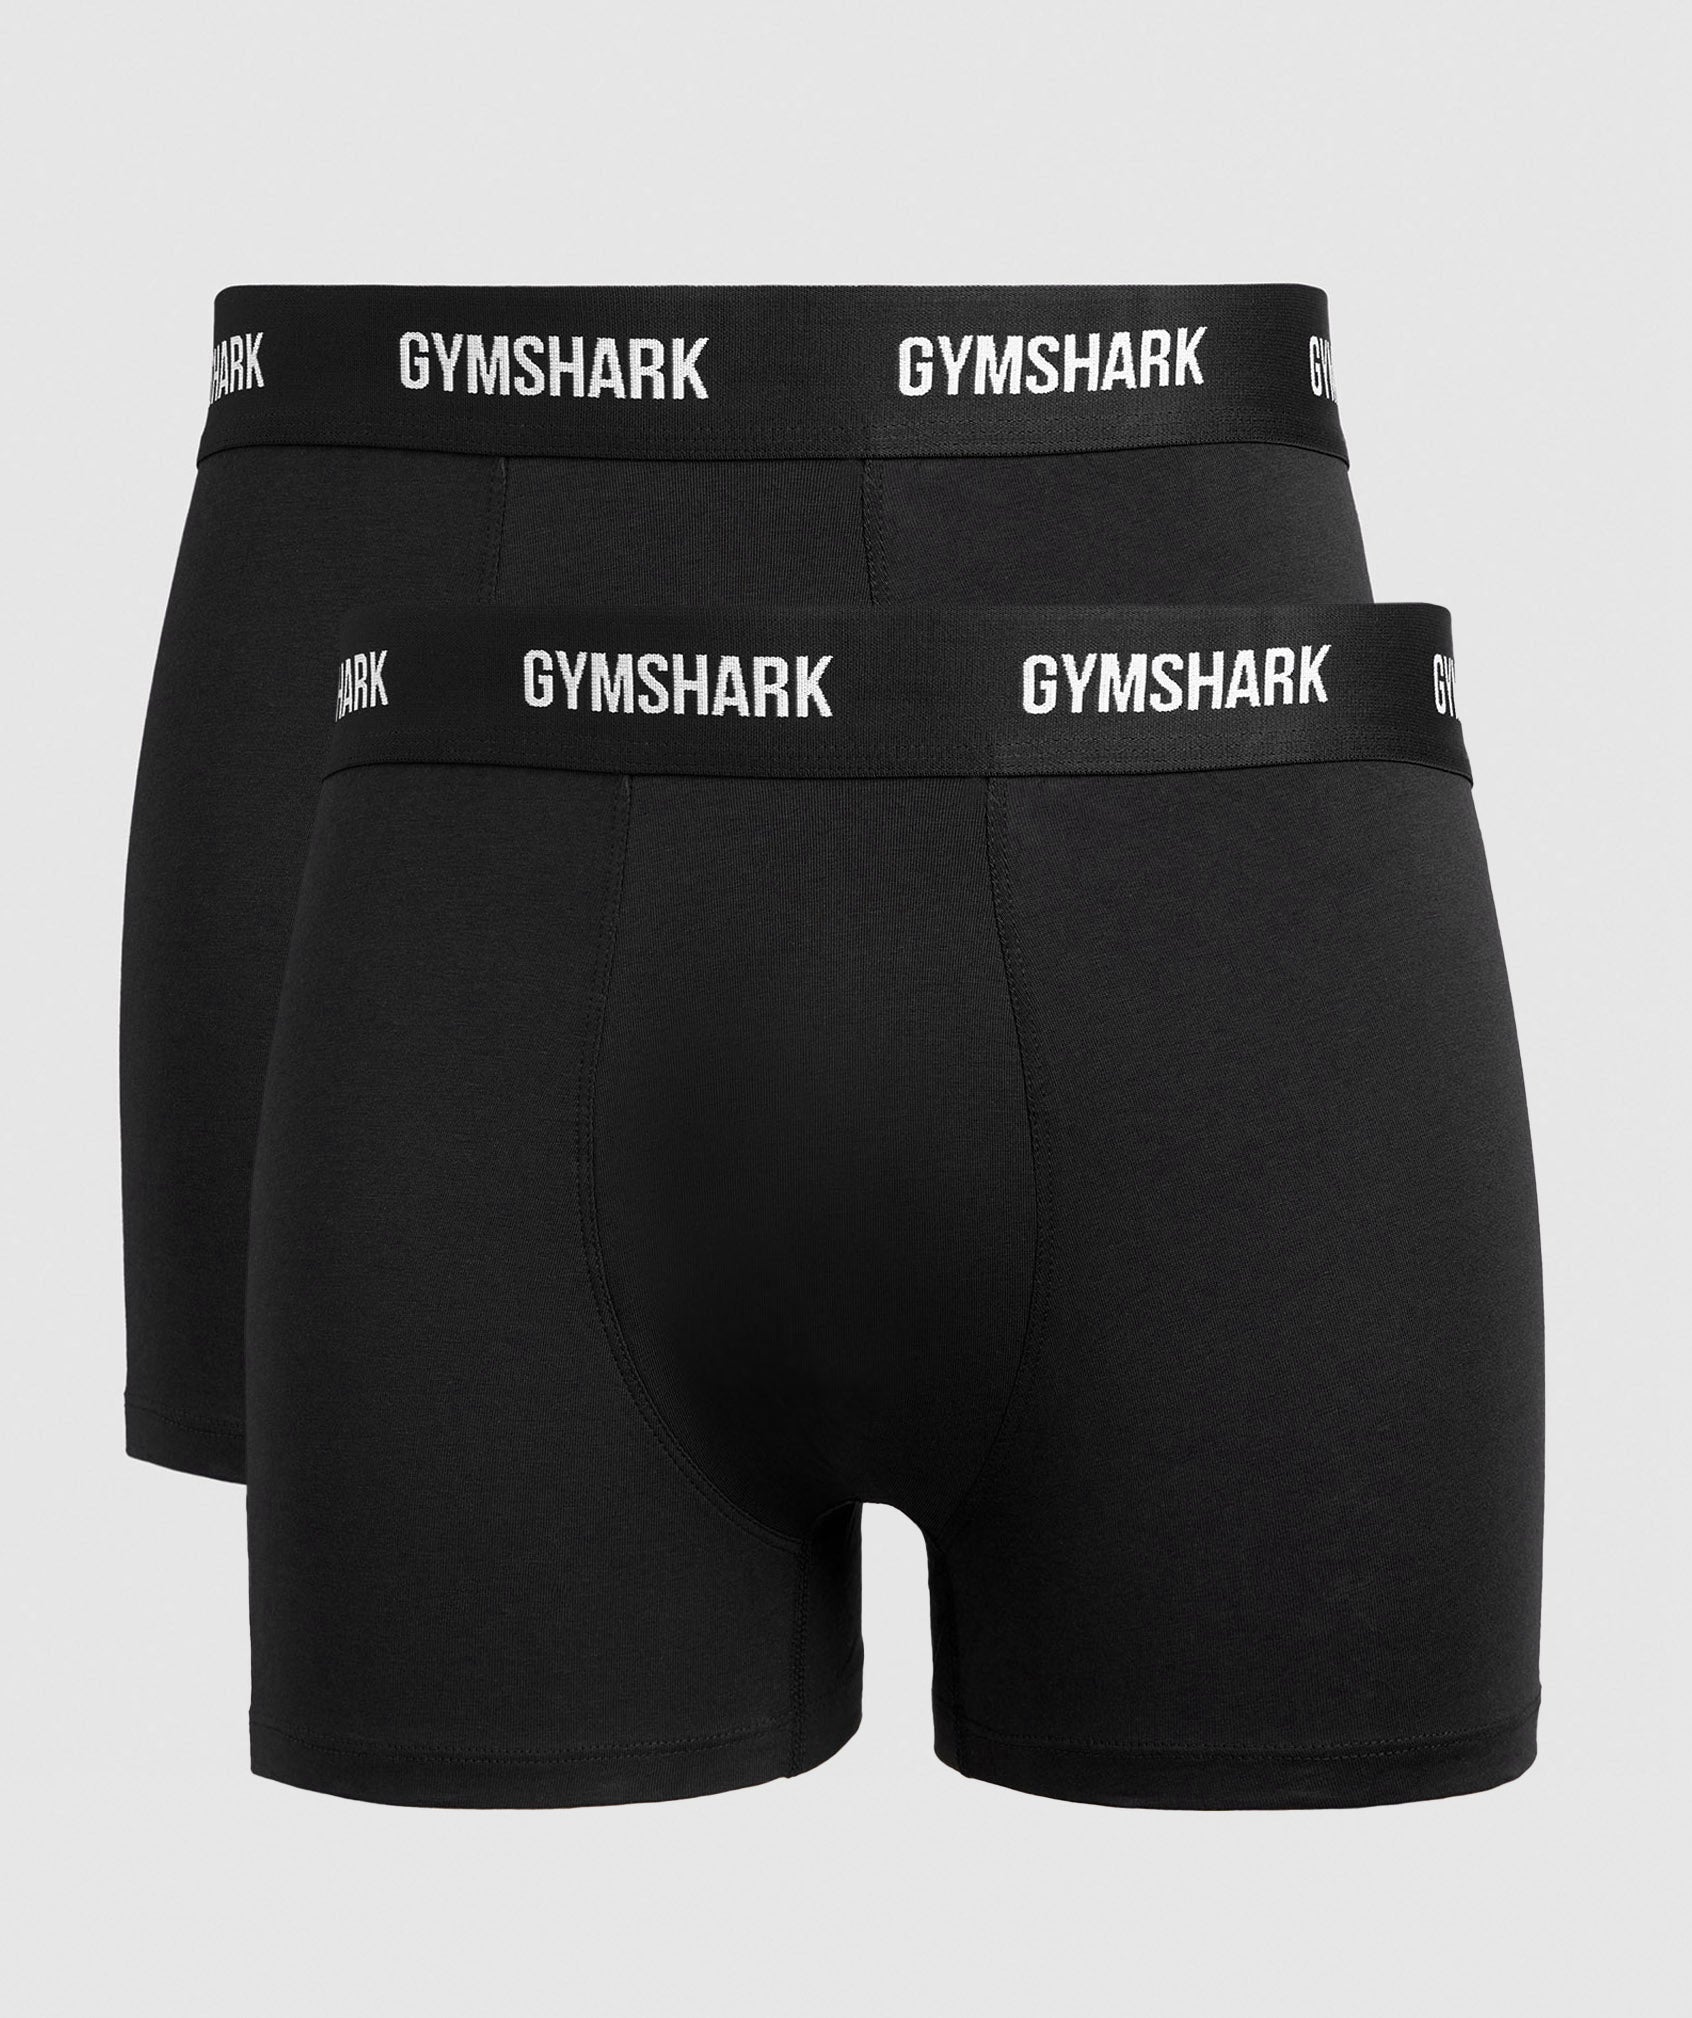 Gymshark on X: #GymShark underwear launching tonight!